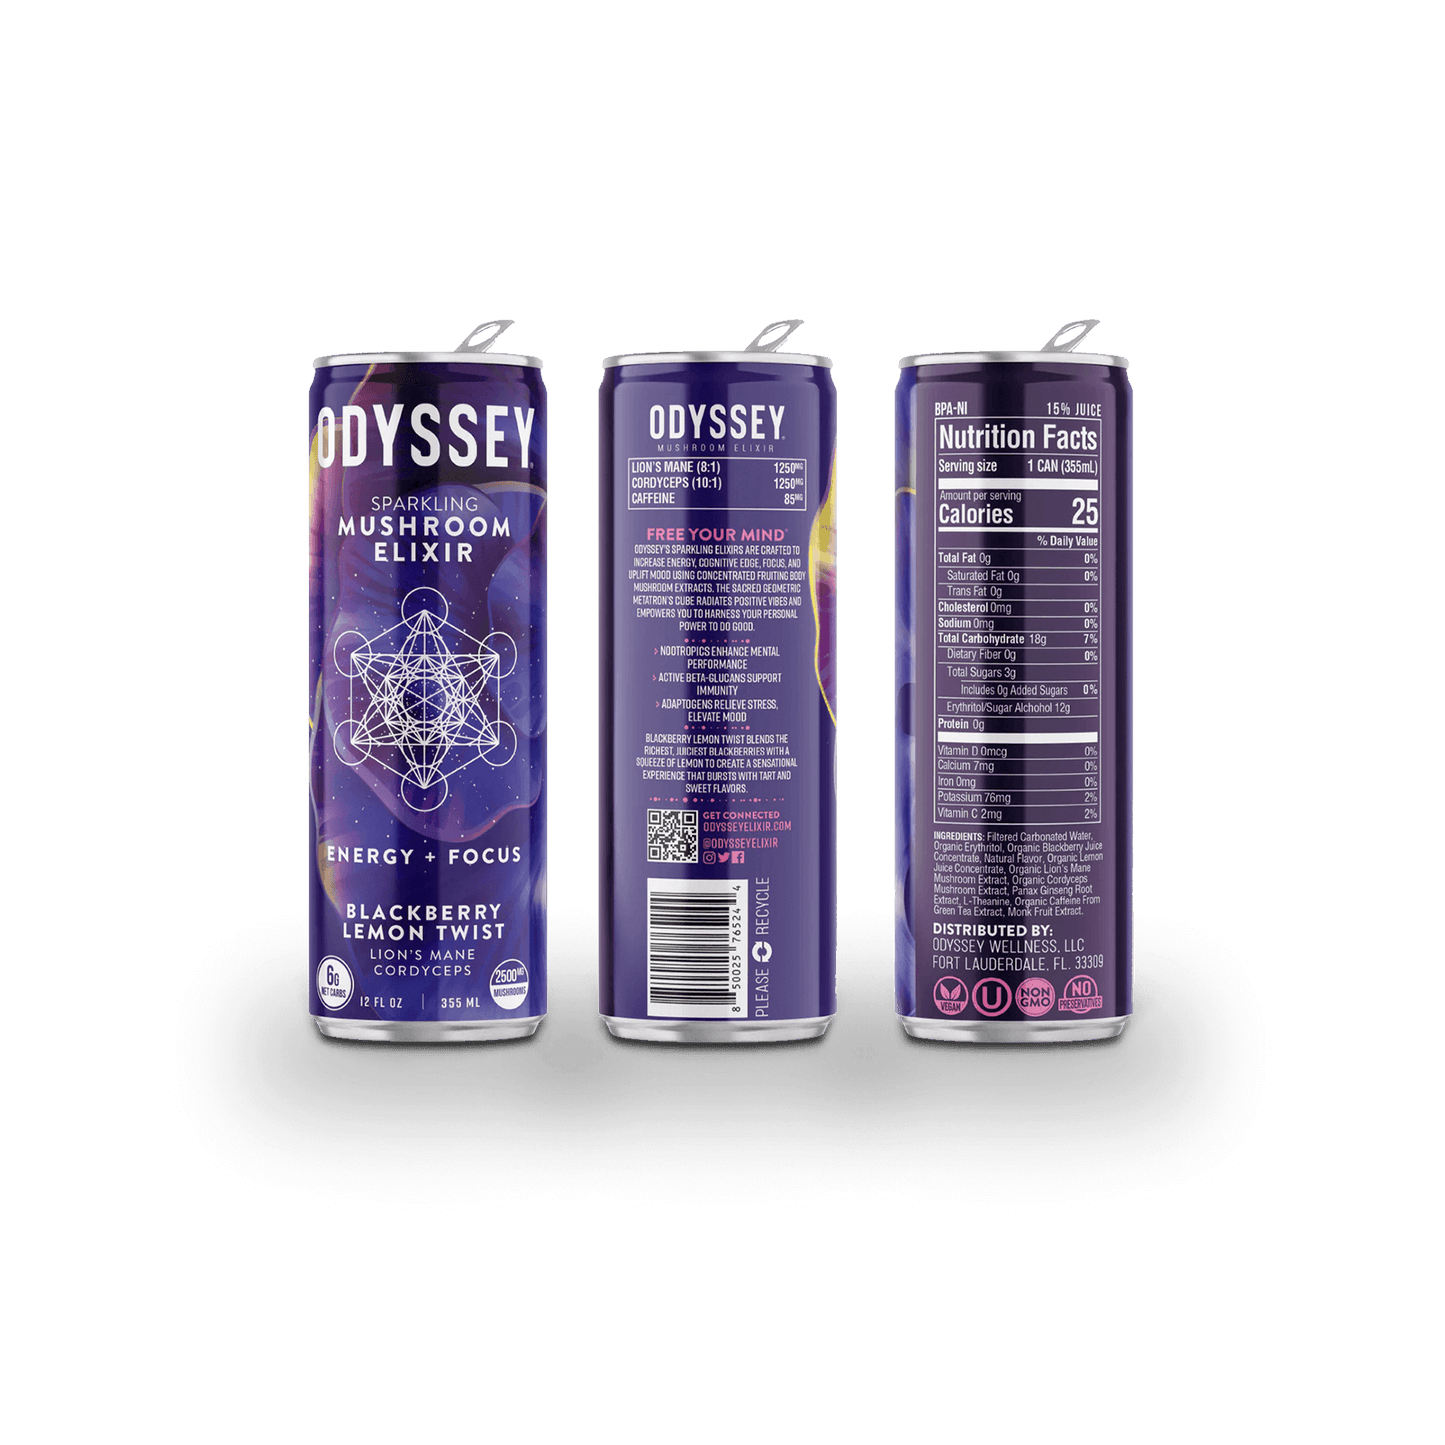 Odyssey Mushroom Elixir | Energy & Focus - Blackberry Lemon Twist Back Label